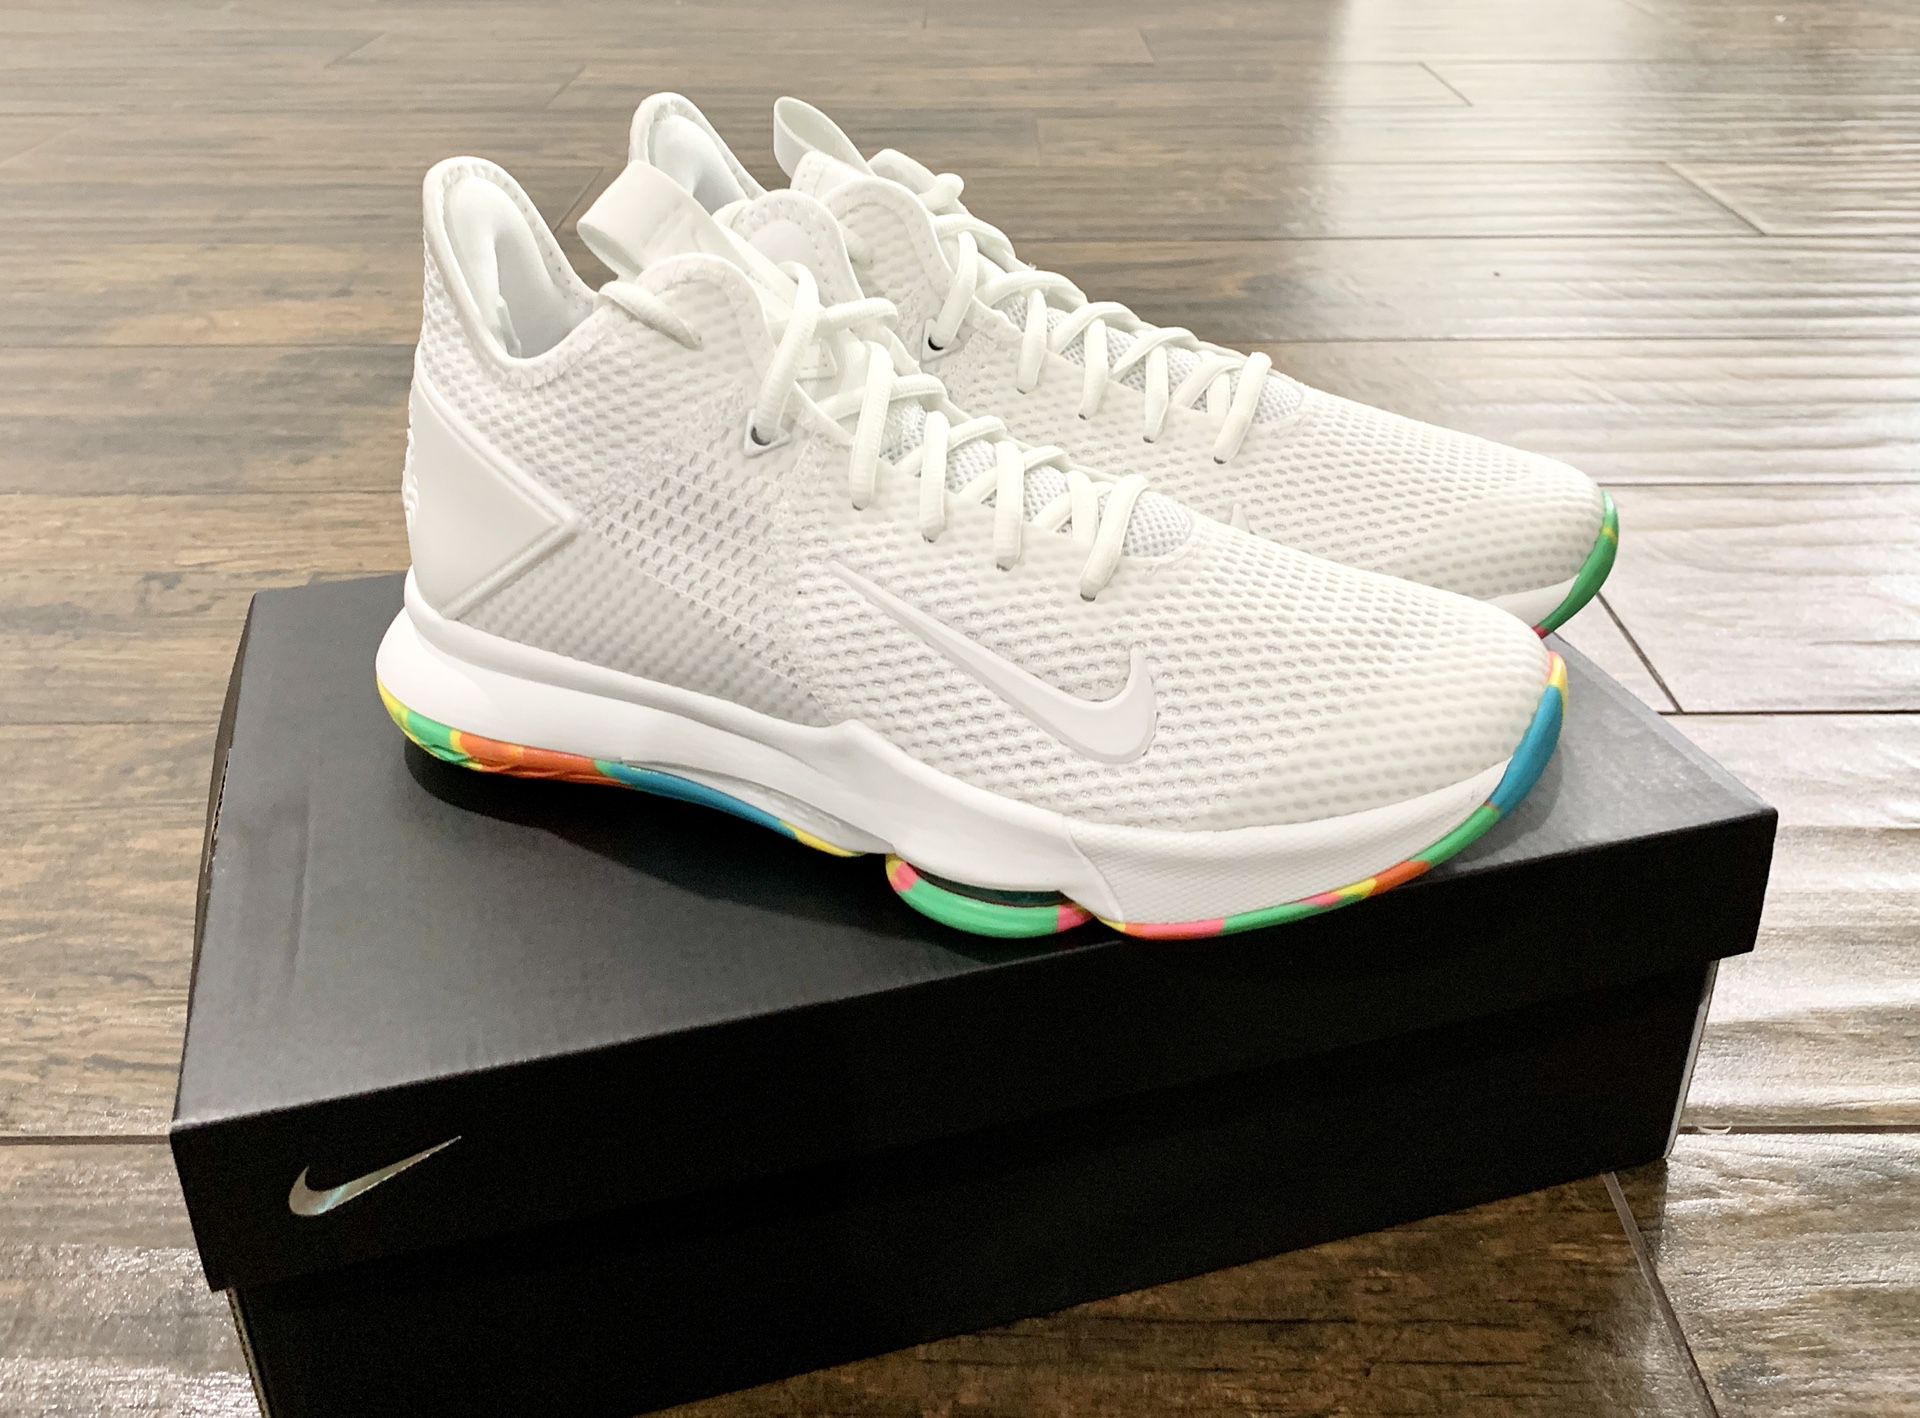 Nike LeBron Basketball Shoes New In Box